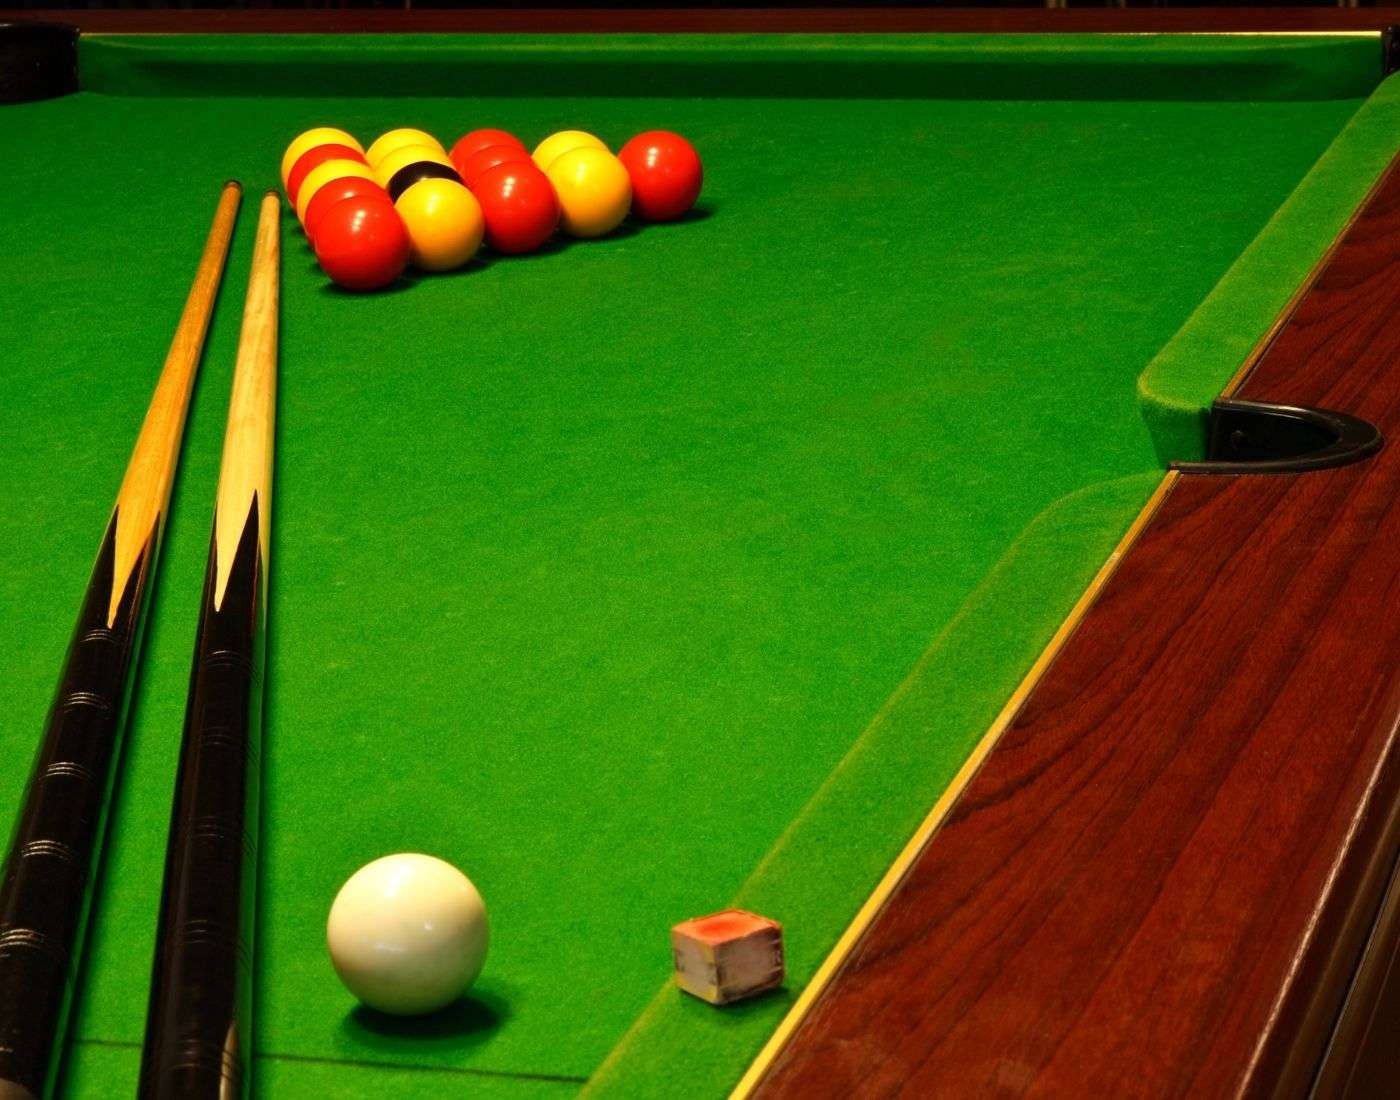 Download Billiards Pool Sticks And Balls On Pool Table Wallpaper ...